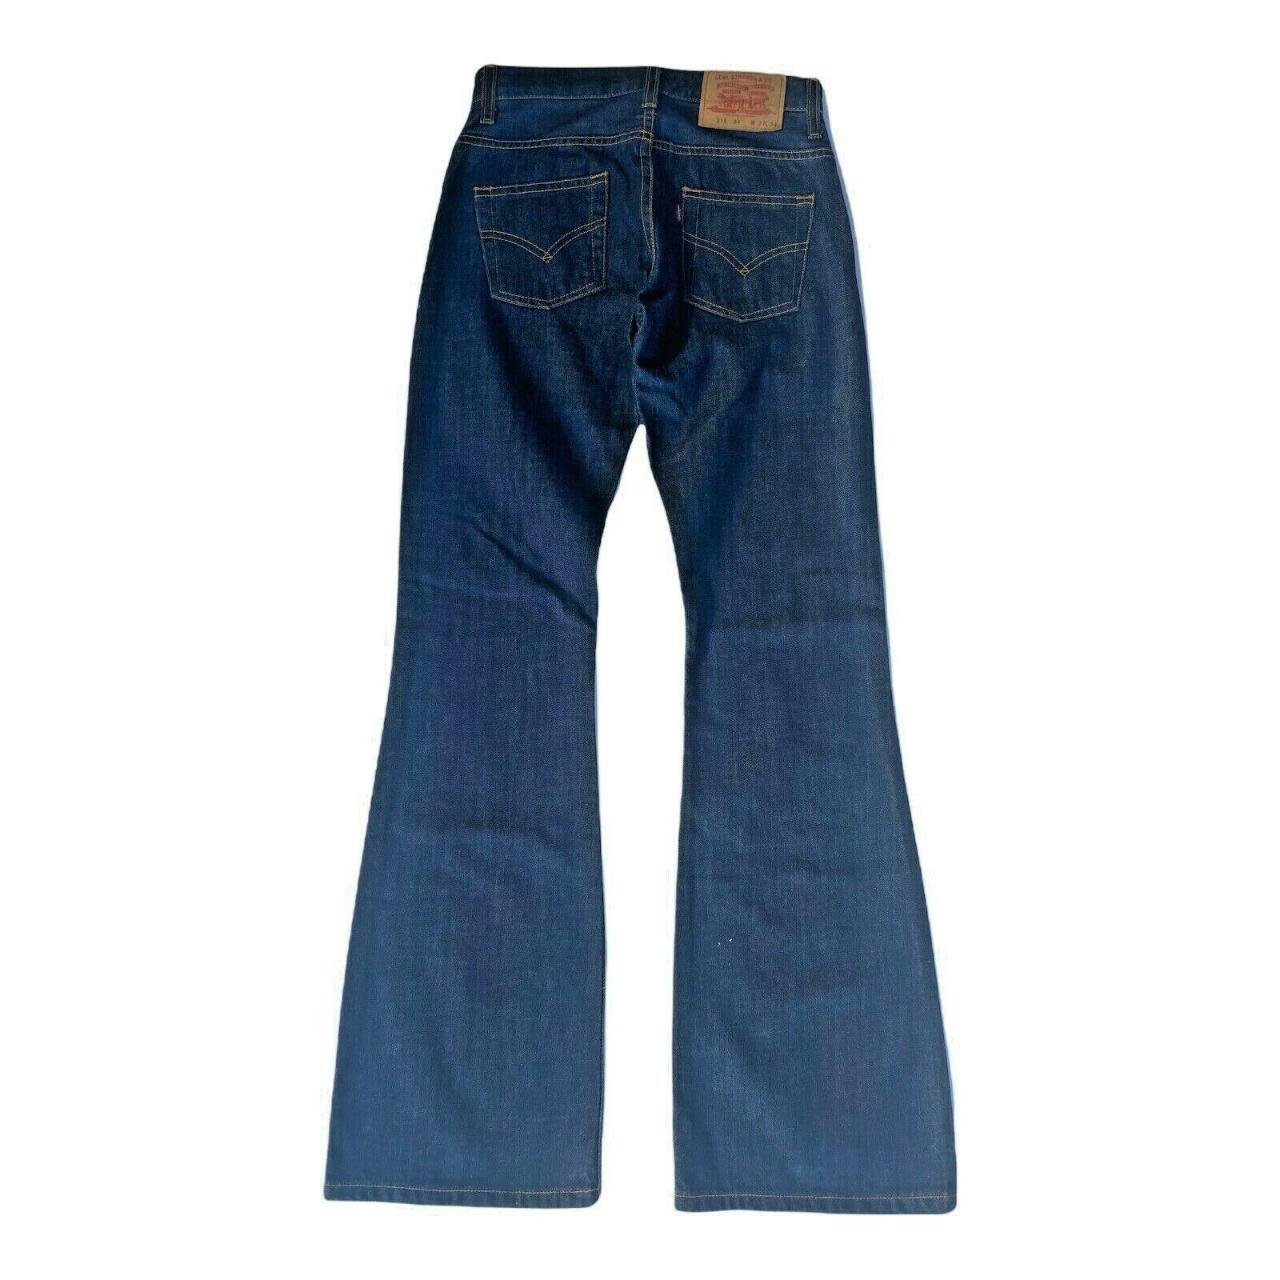 Rare Levi's 516 flared jeans in a dark blue colour.... - Depop